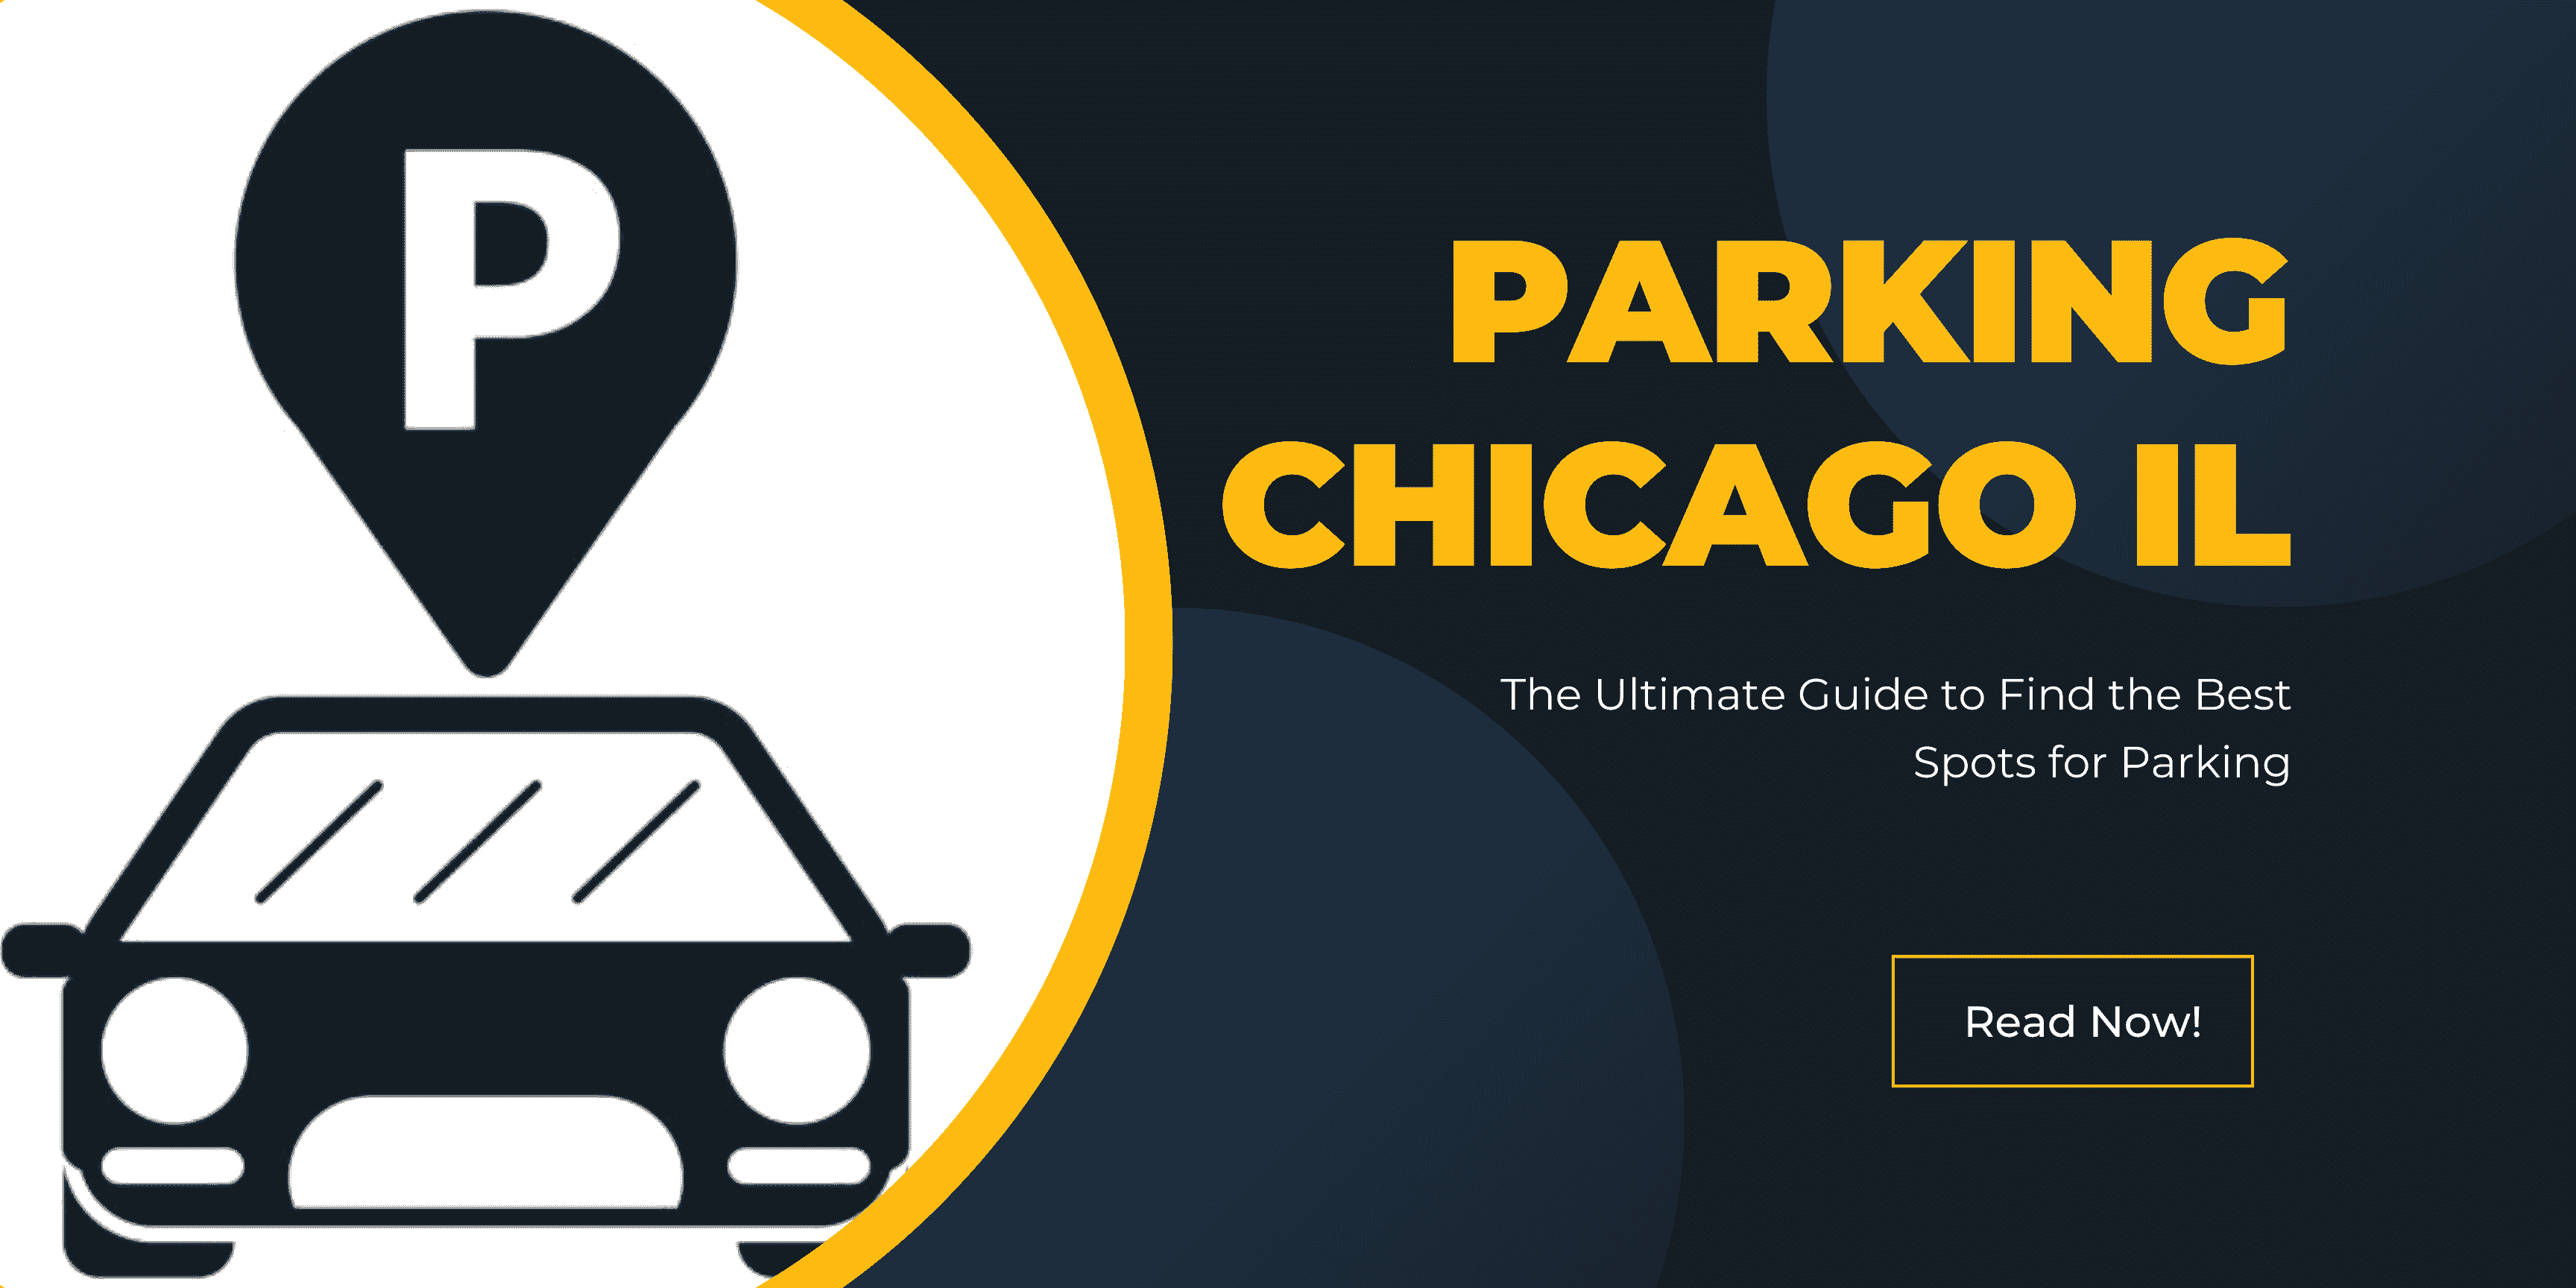 Parking Chicago IL